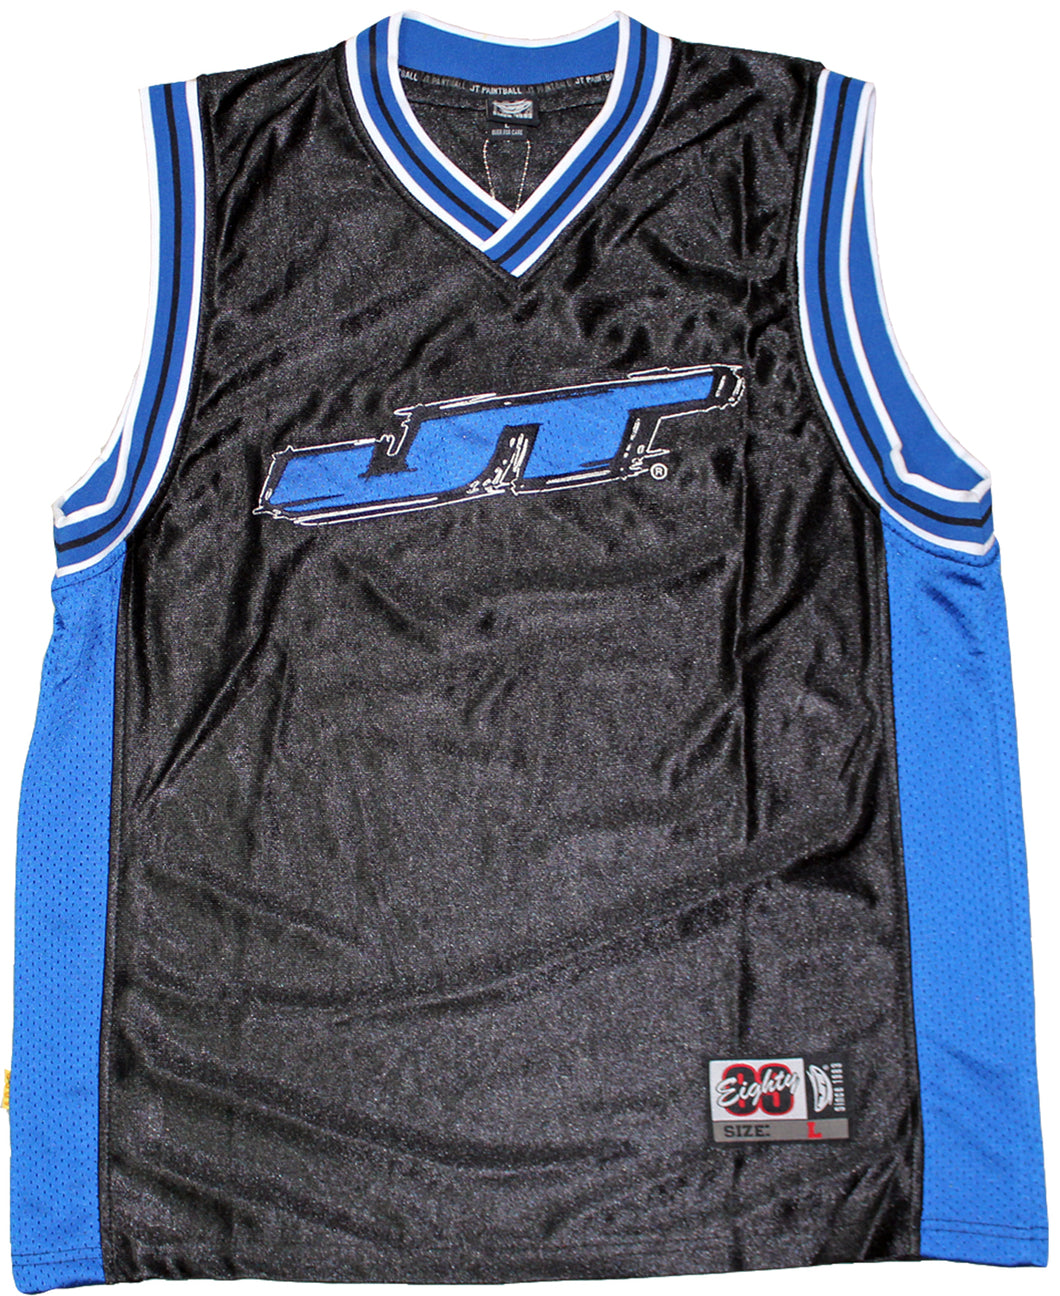 JT Basketball Jersey - Blue/Black